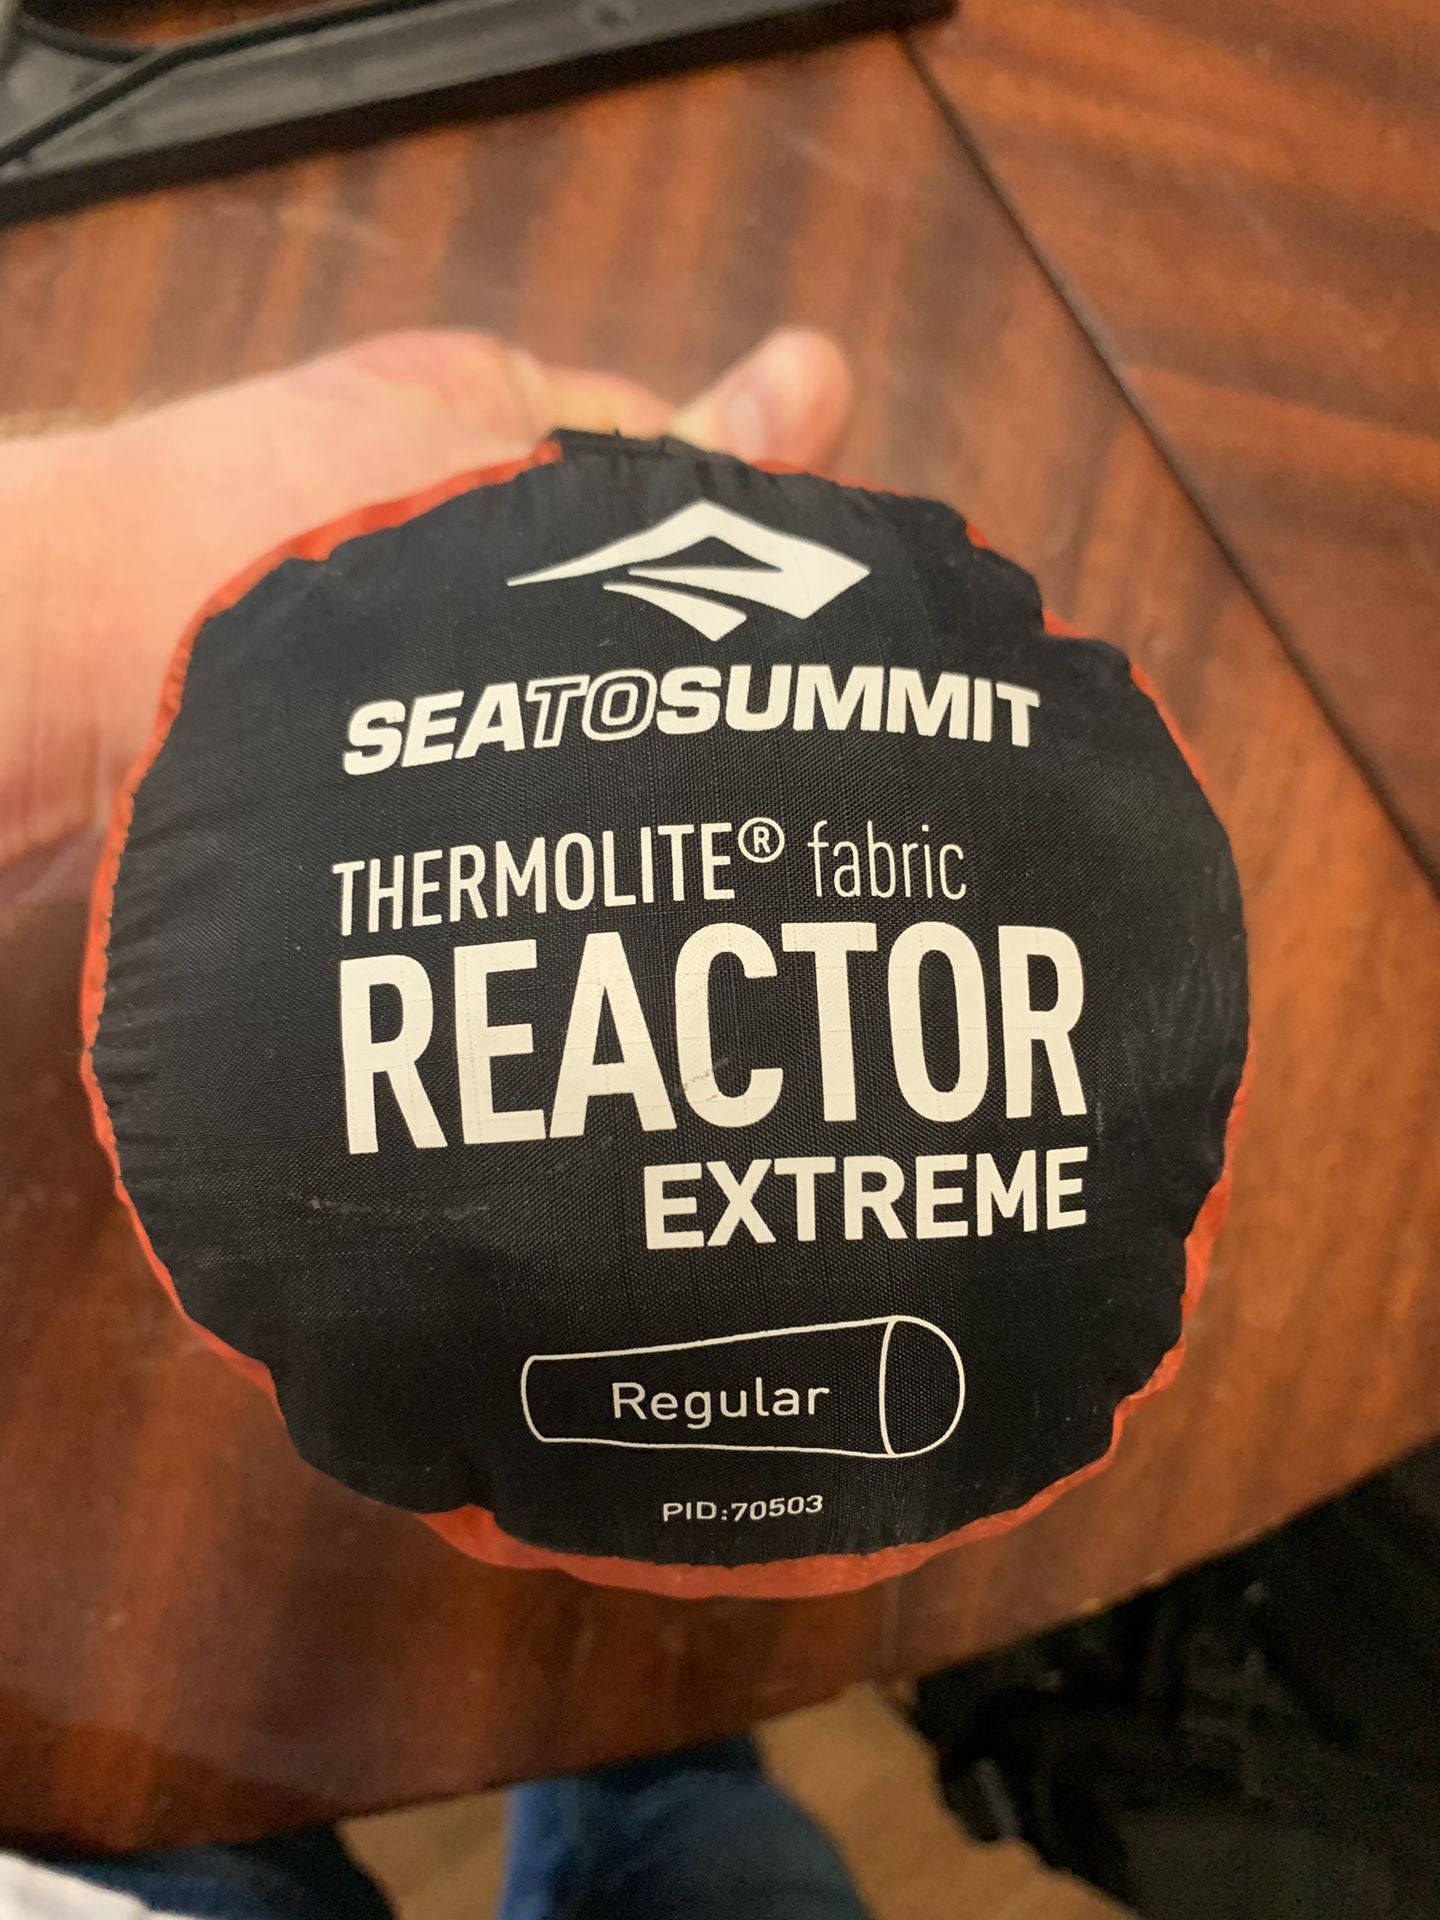 Sea to Summit Thermolite Reactor Extreme Sleeping Bag Liner 